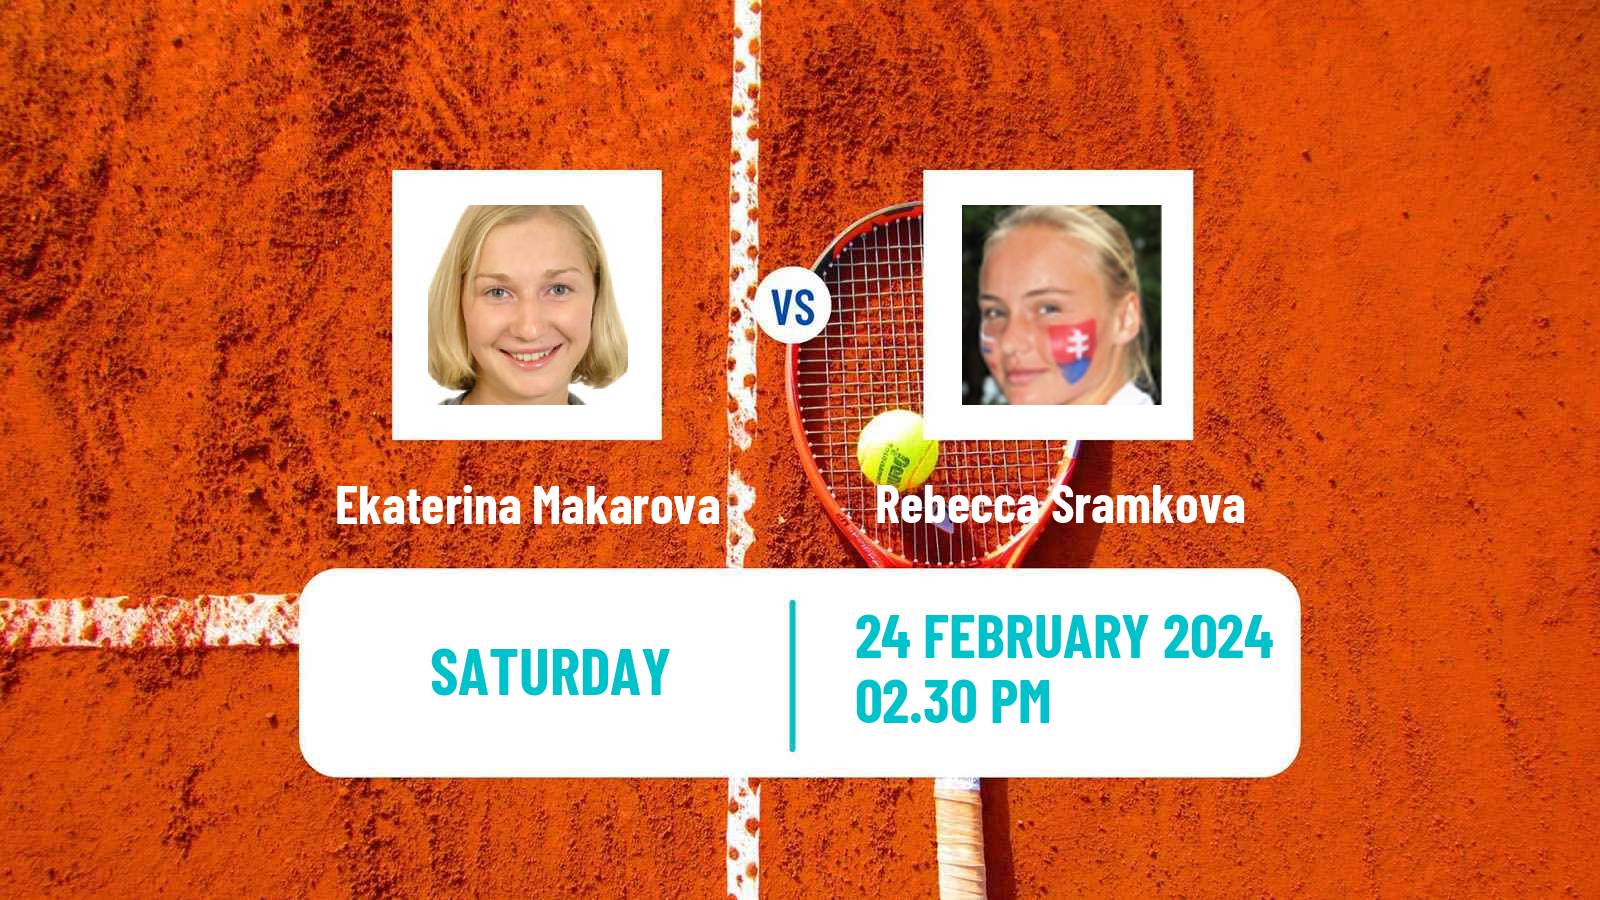 Tennis WTA San Diego Ekaterina Makarova - Rebecca Sramkova